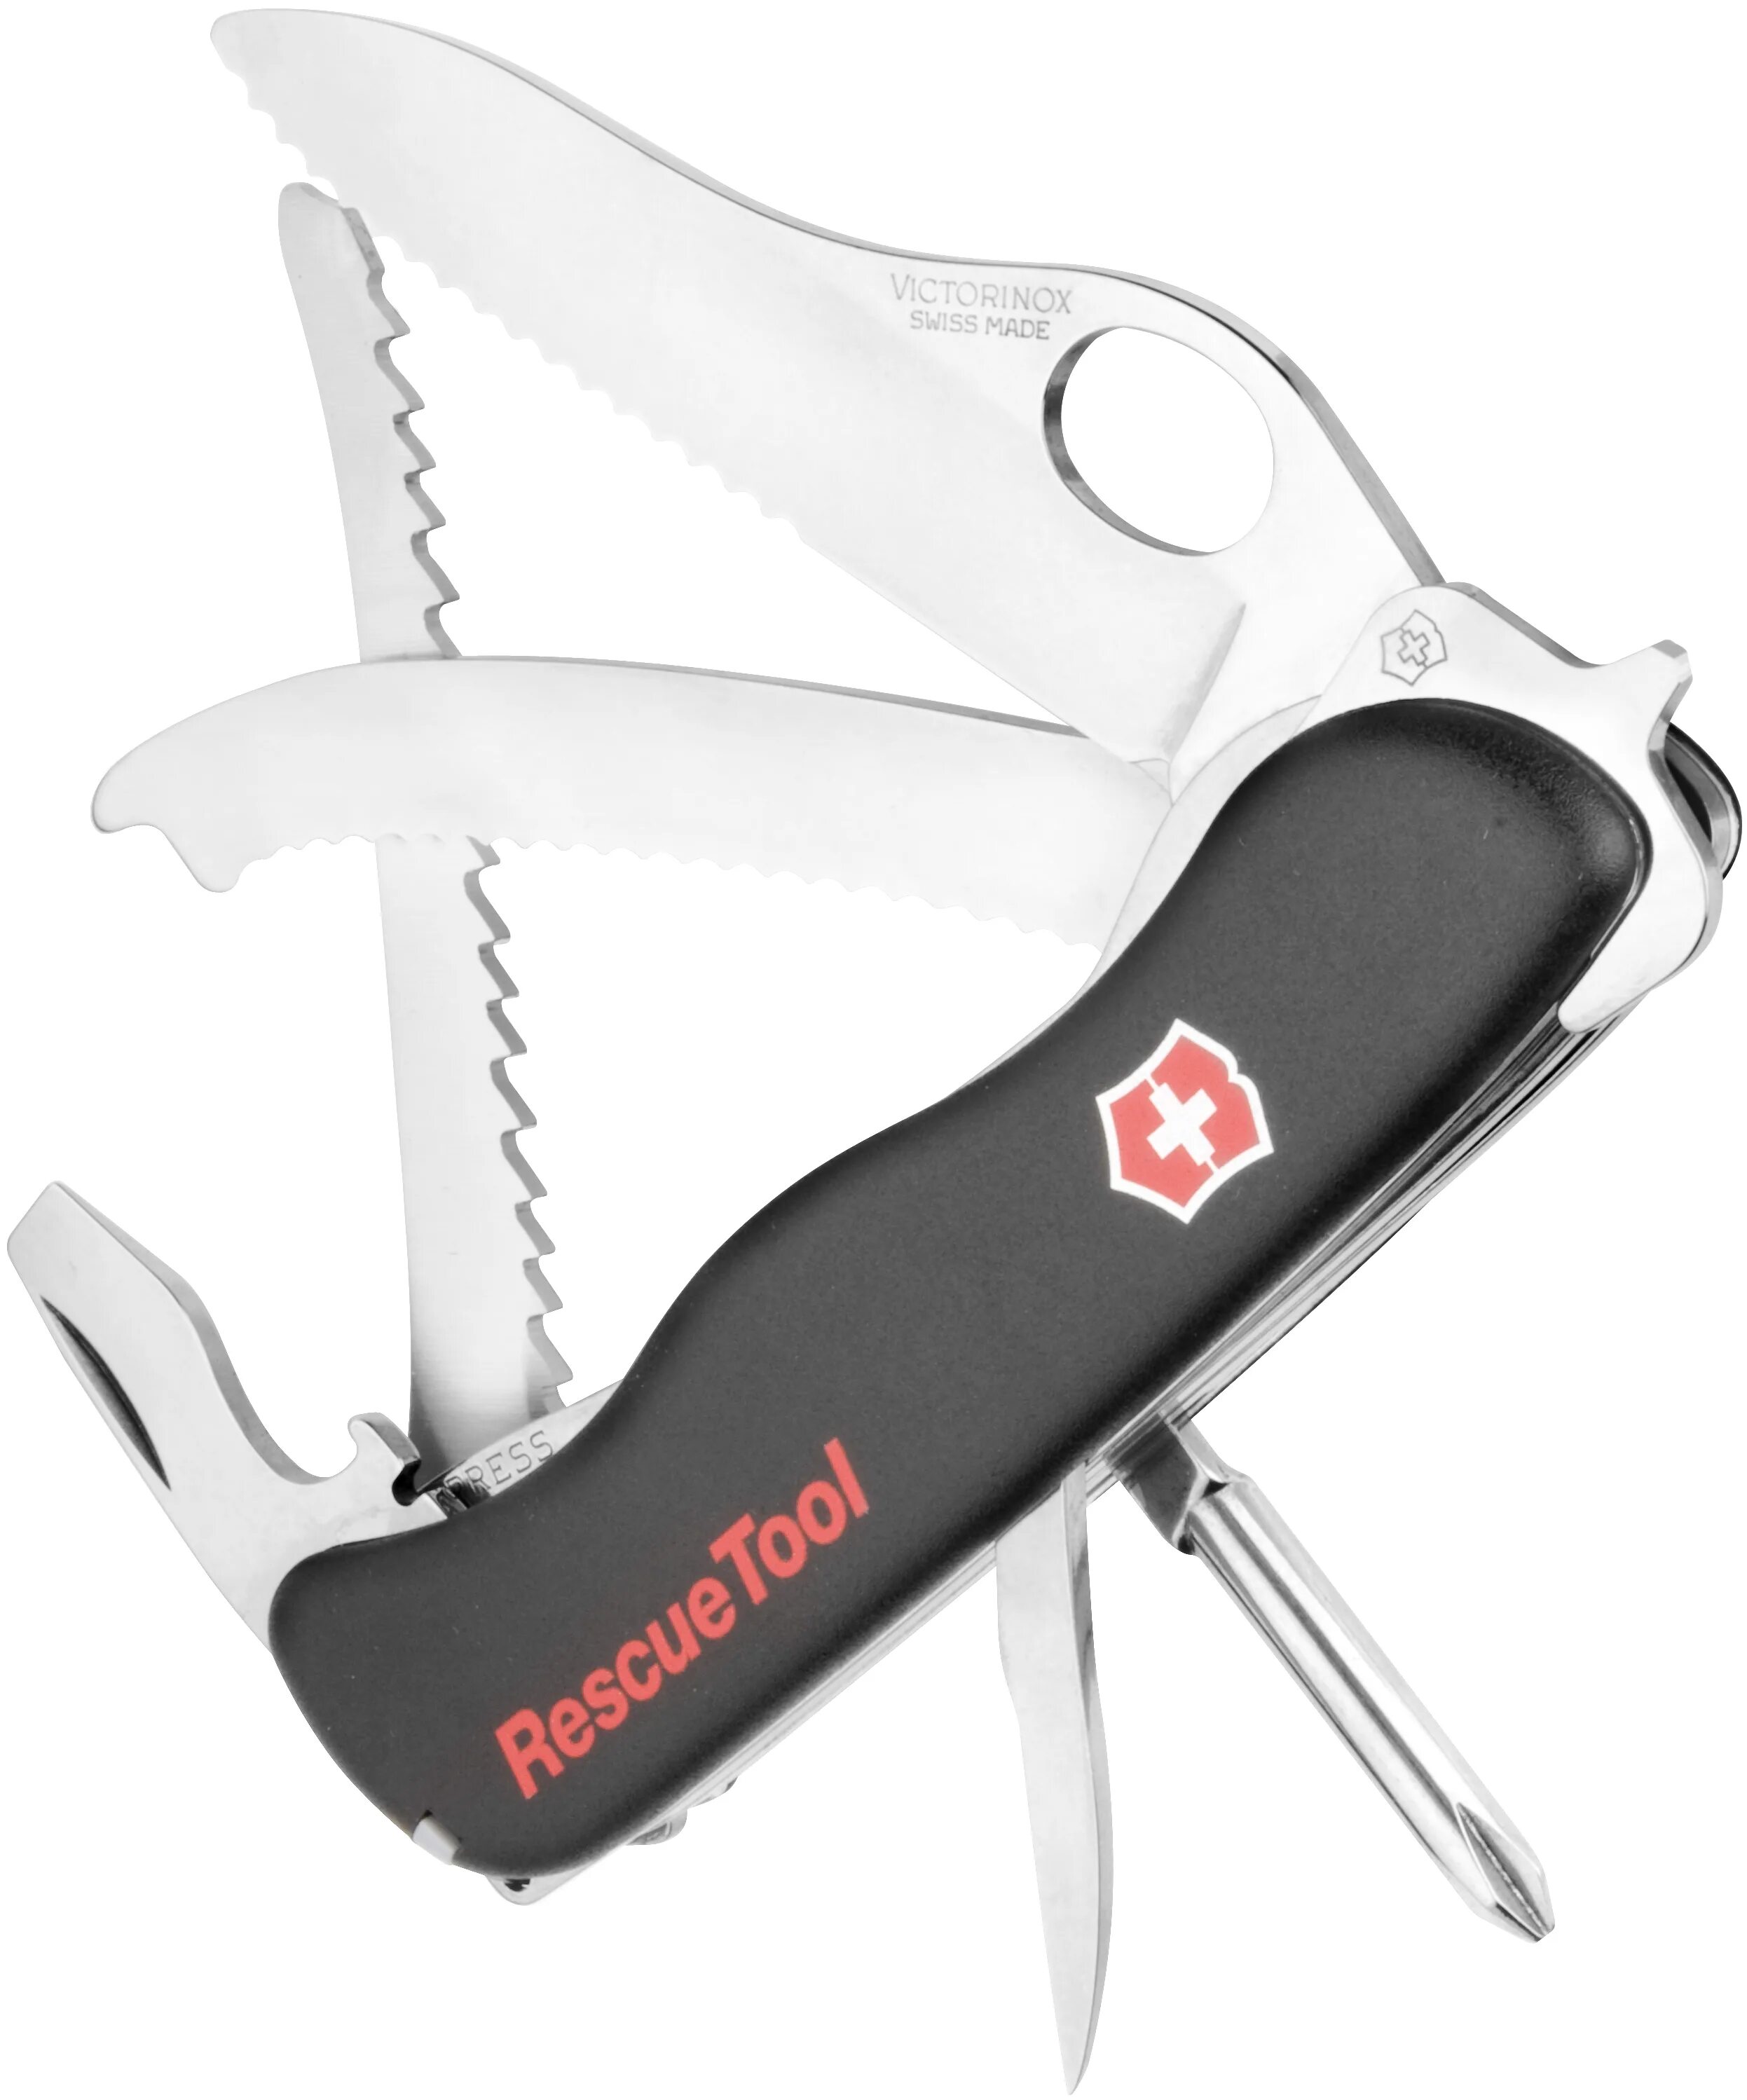 Мультитул Викторинокс Rescue. Victorinox Swiss Tool. Victorinox Swiss Army Knife. Нож Victorinox Rescue Tool. Rescue tool